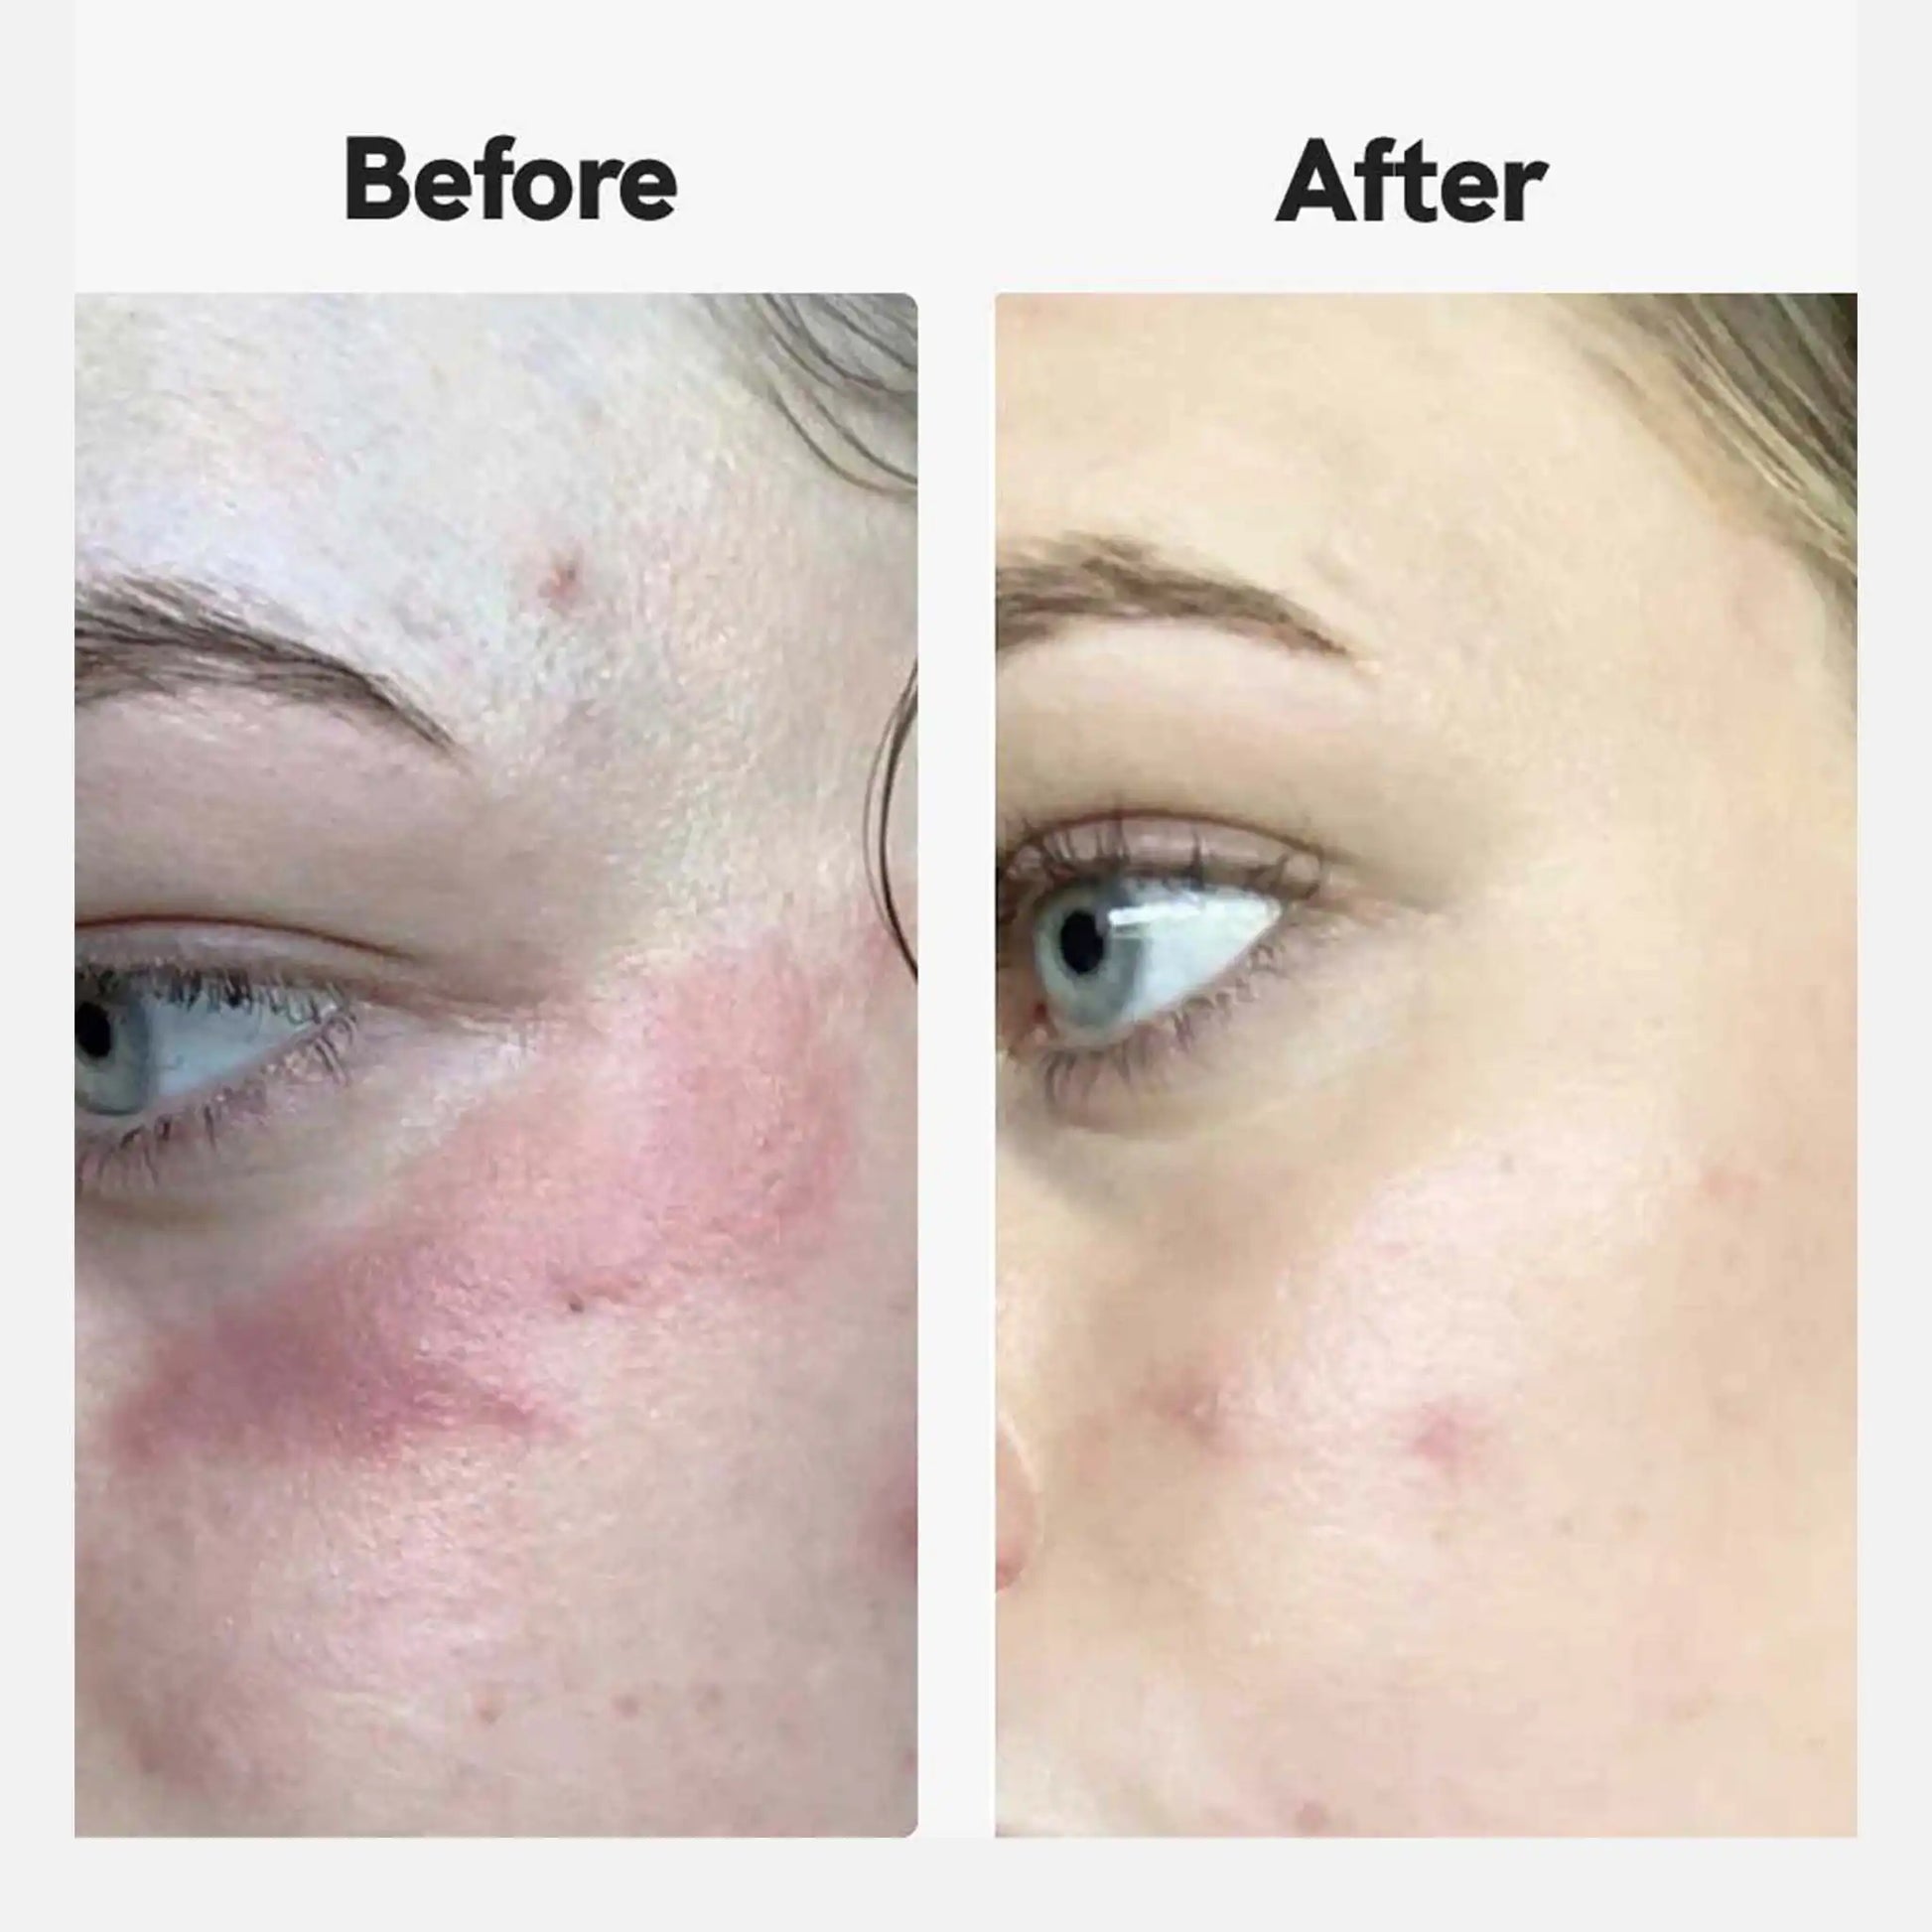 Results from customers using Nordic Oil's cbd eczema cream